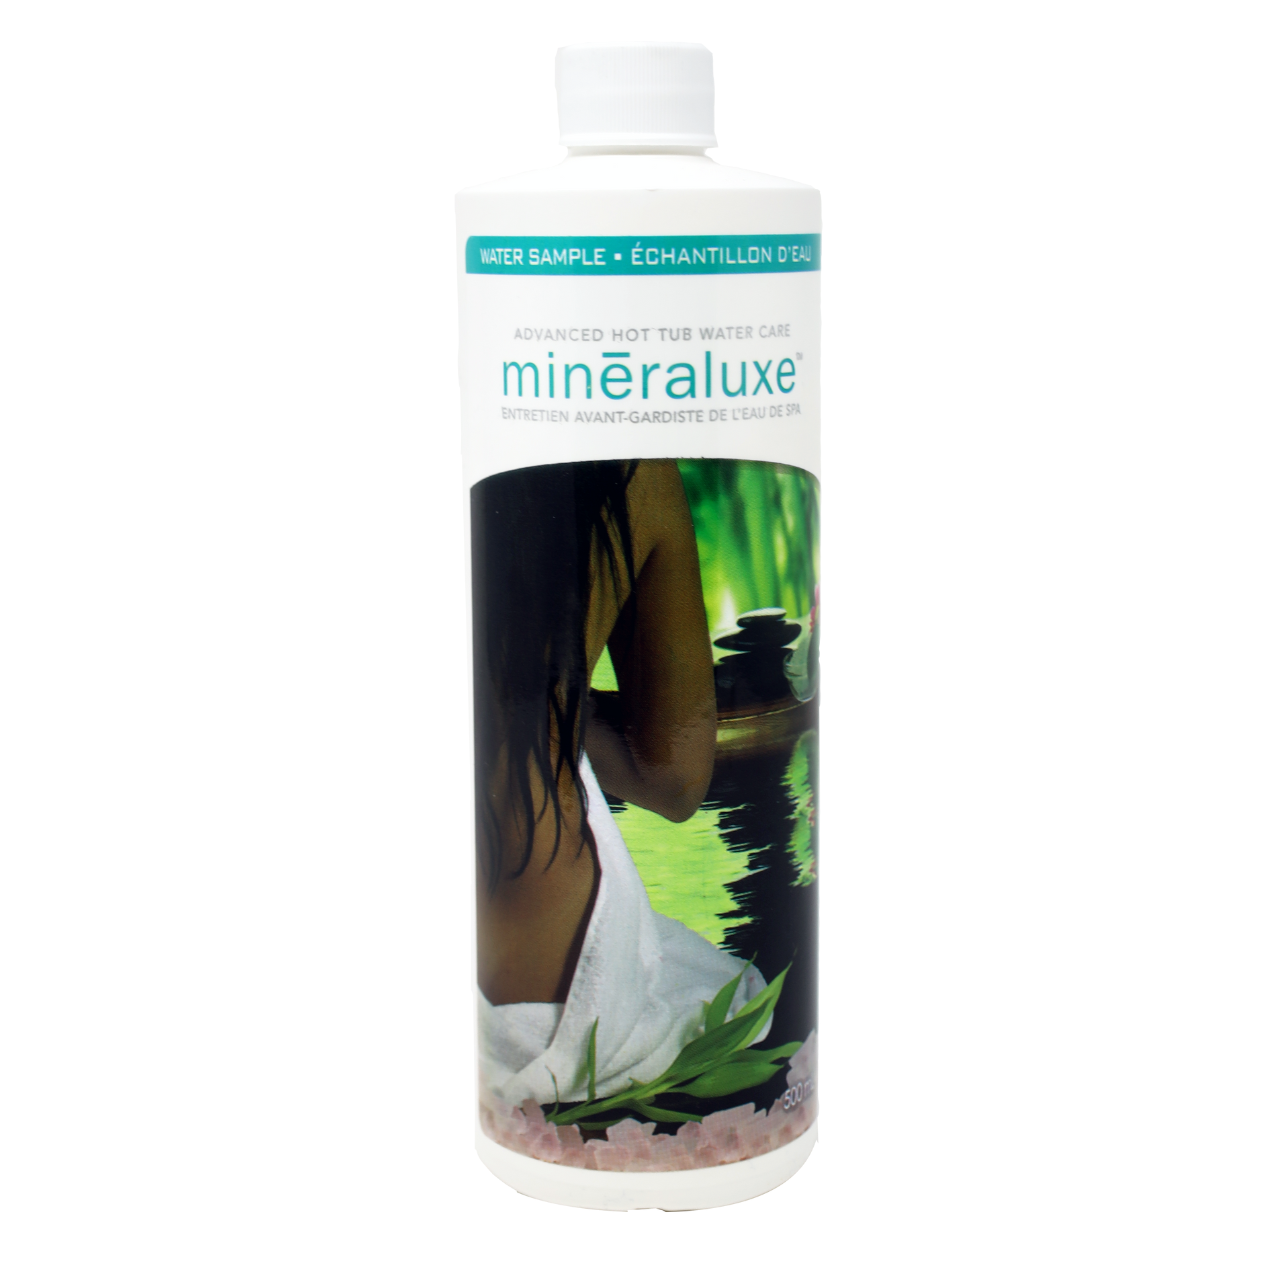 Mineraluxe Hot Tub Water Sample Bottle